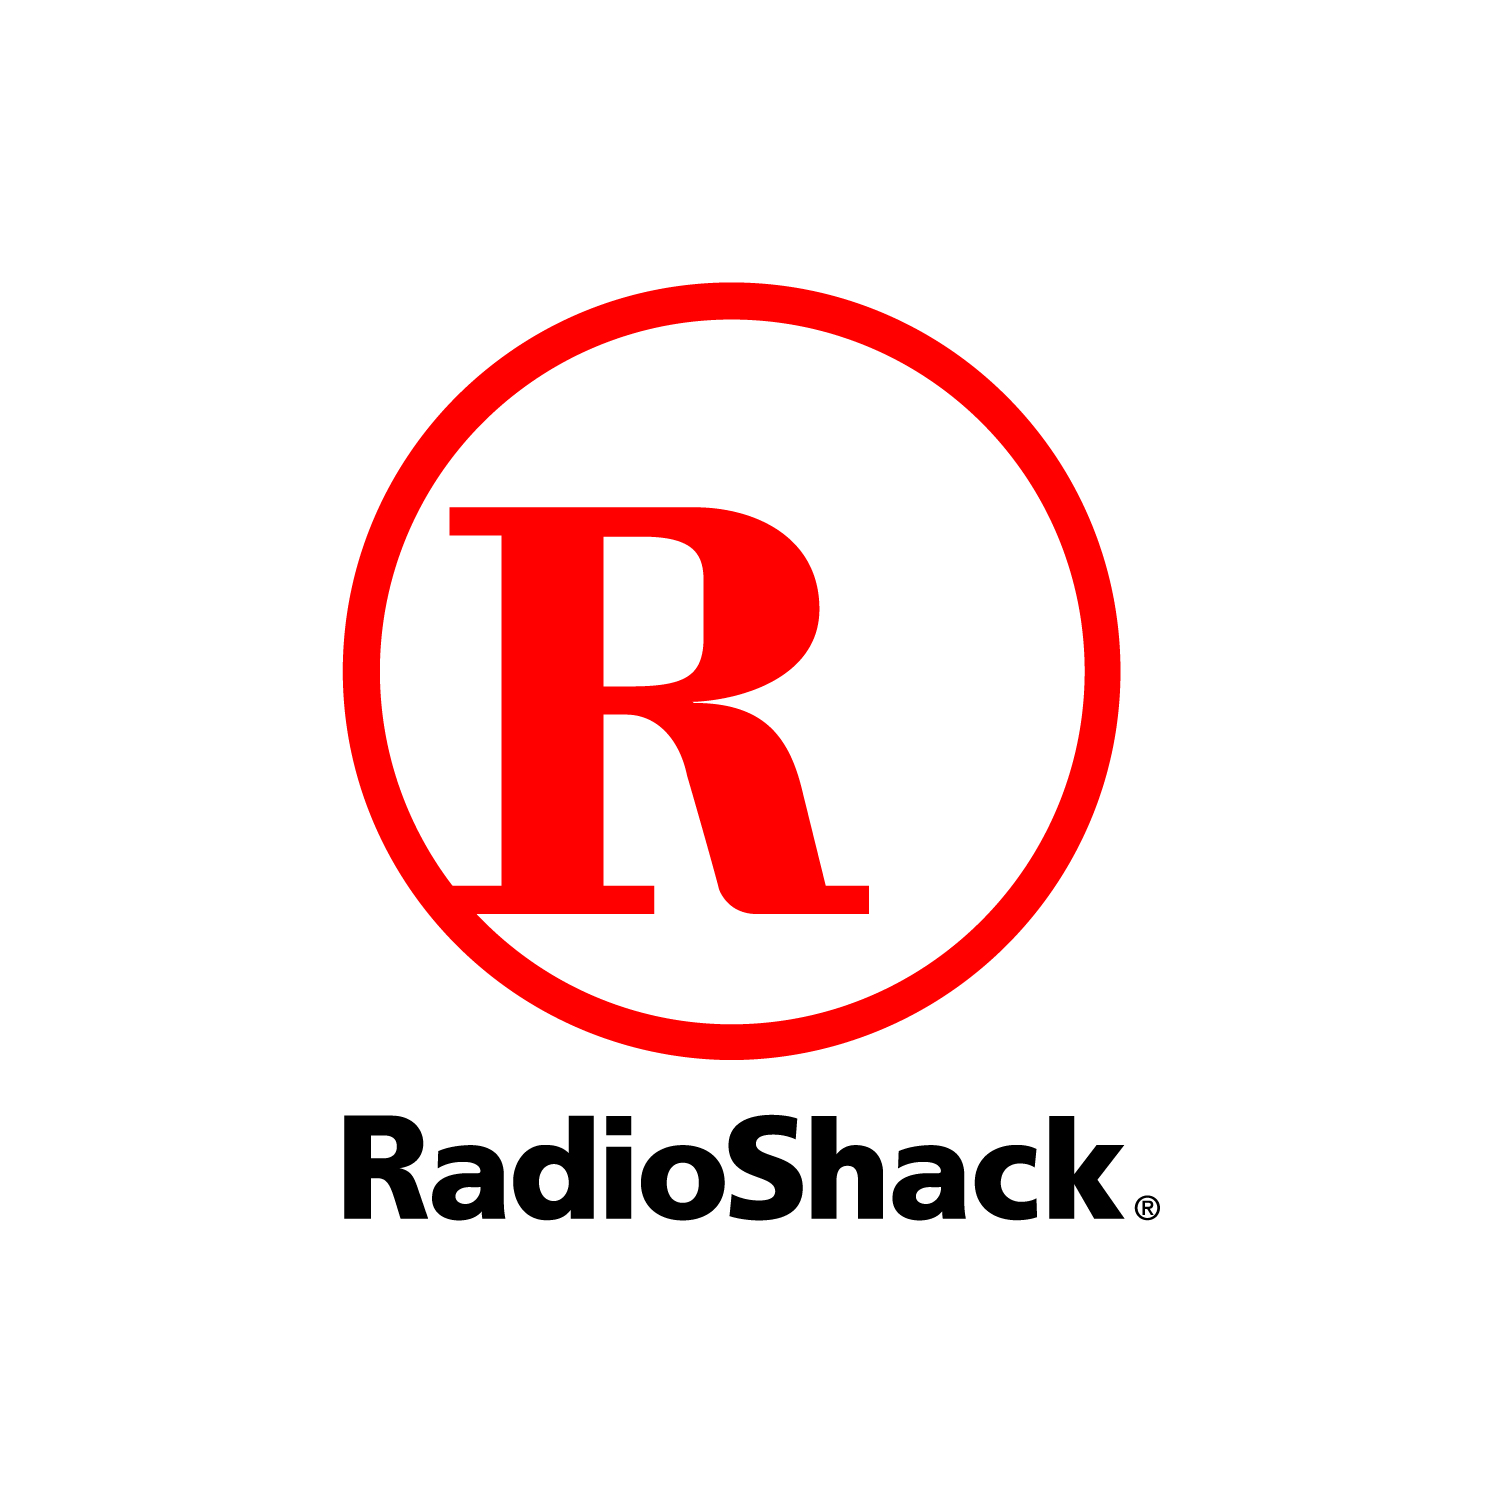 Radioshack Logo photo - 1